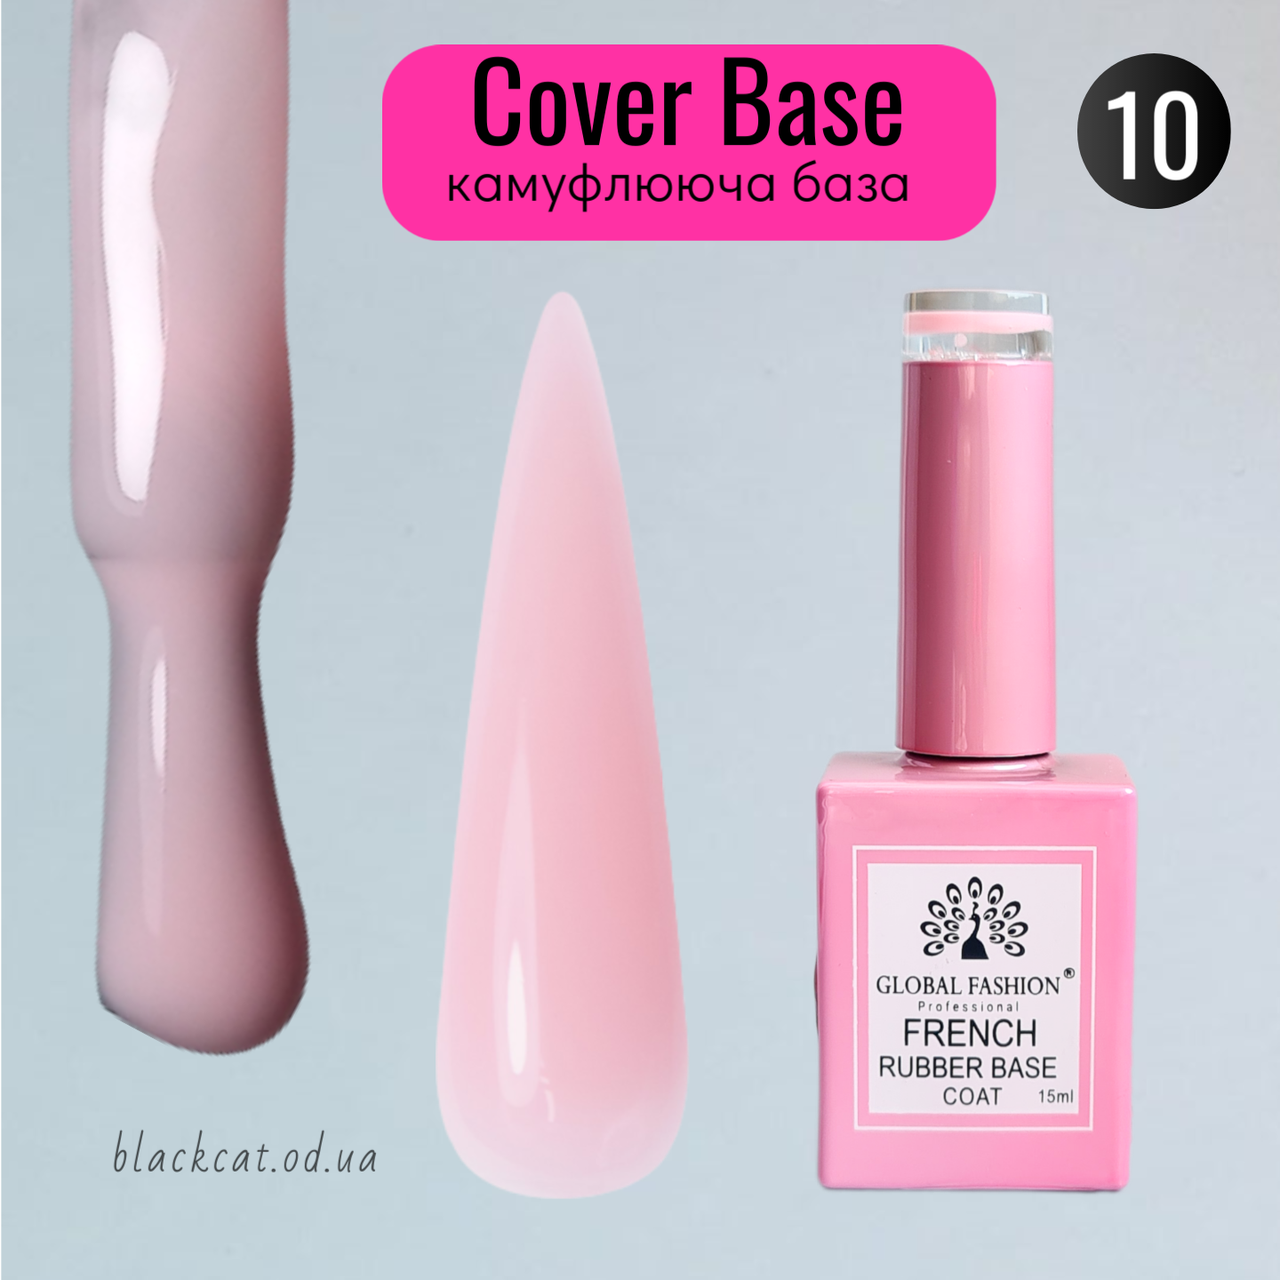 Камуфлююча рожева база для нігтів French Rubber Base Global Fashion 15 ml №10